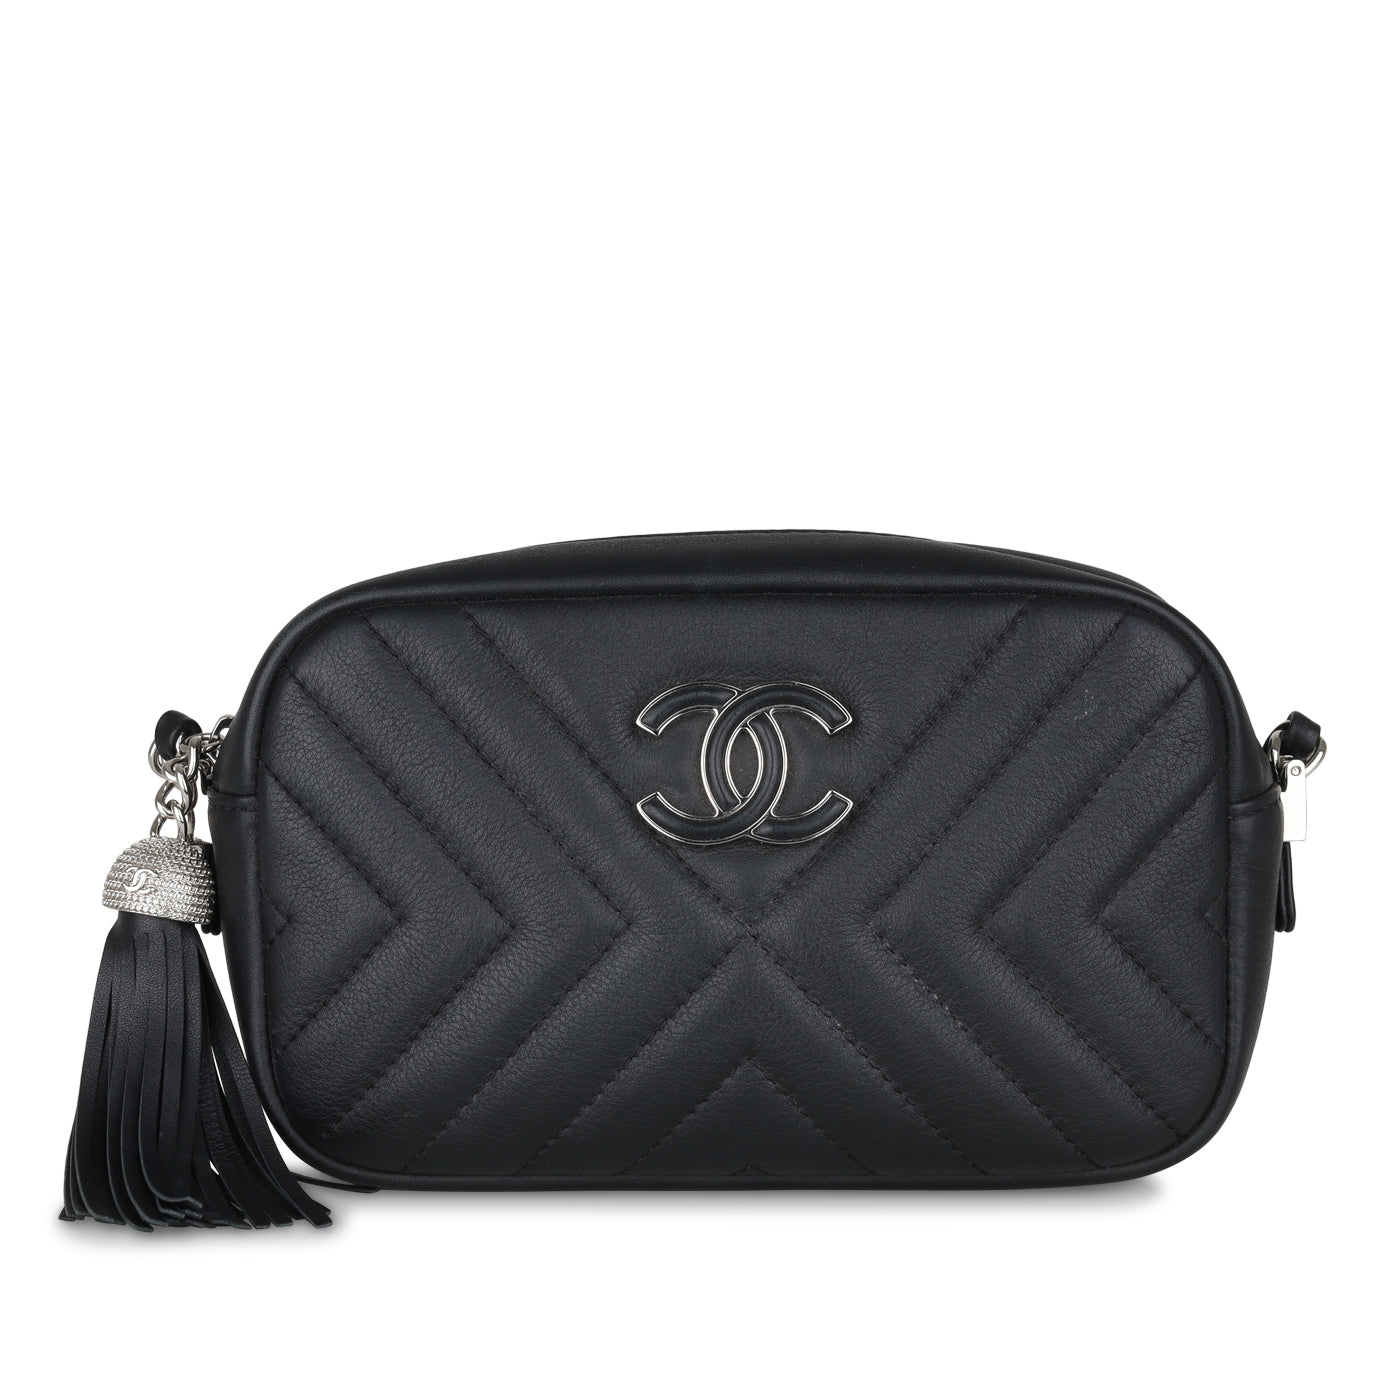 Chanel - Chevron Camera Bag - Black Lambskin